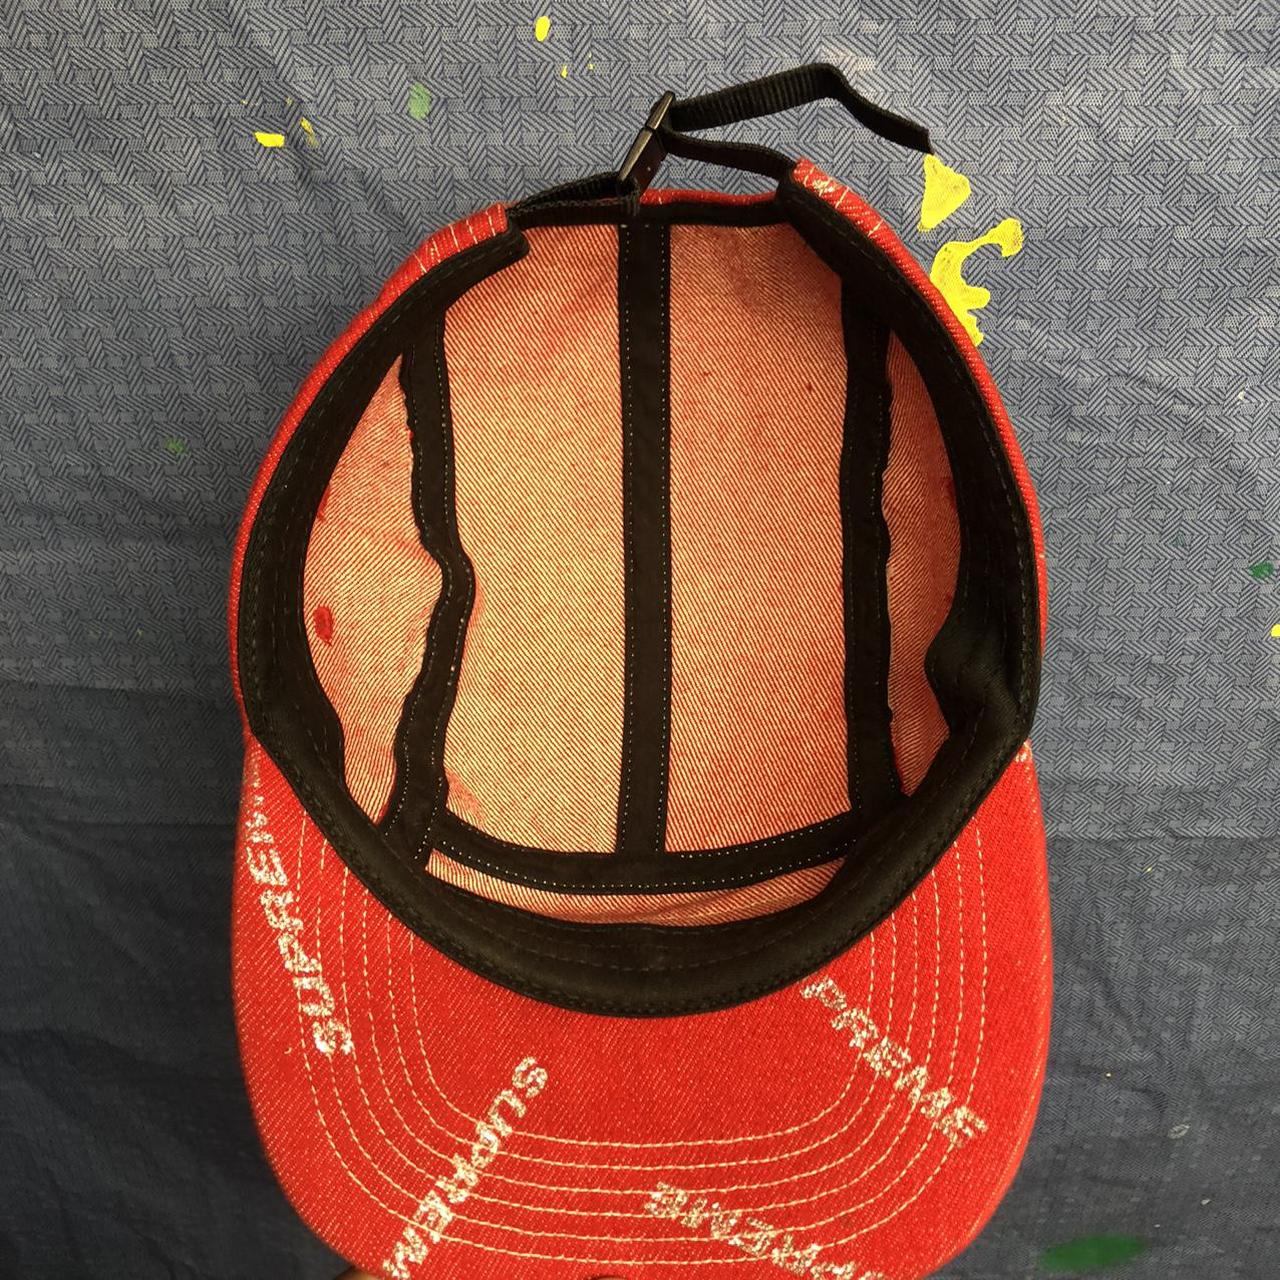 Supreme Frayed Logos Red Denim Camp Cap Hat Red - Depop